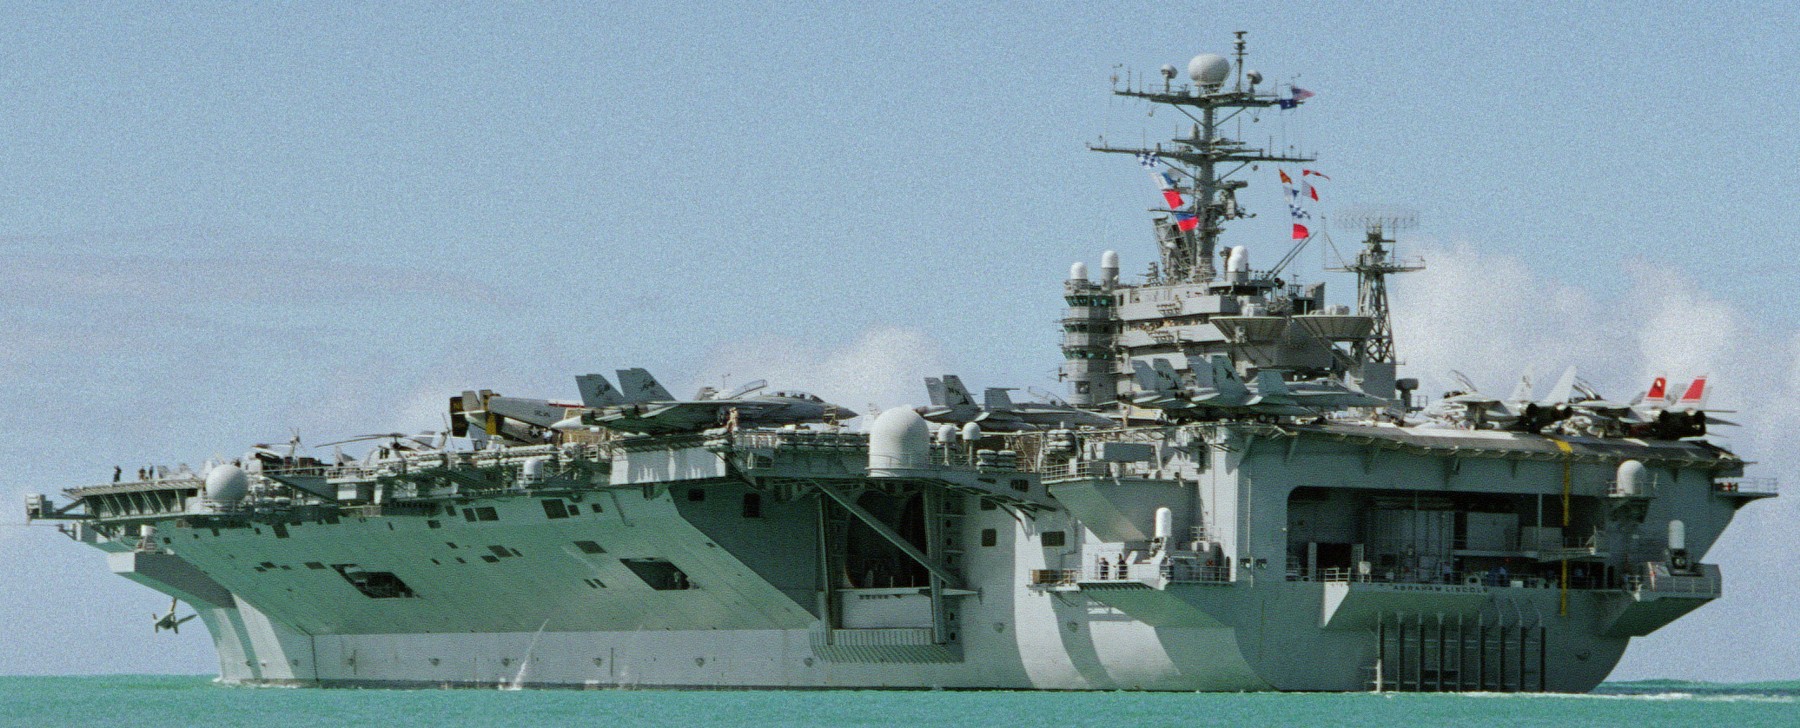 cvn-72 uss abraham lincoln nimitz class aircraft carrier air wing cvw-14 us navy exercise rimpac 2000 105